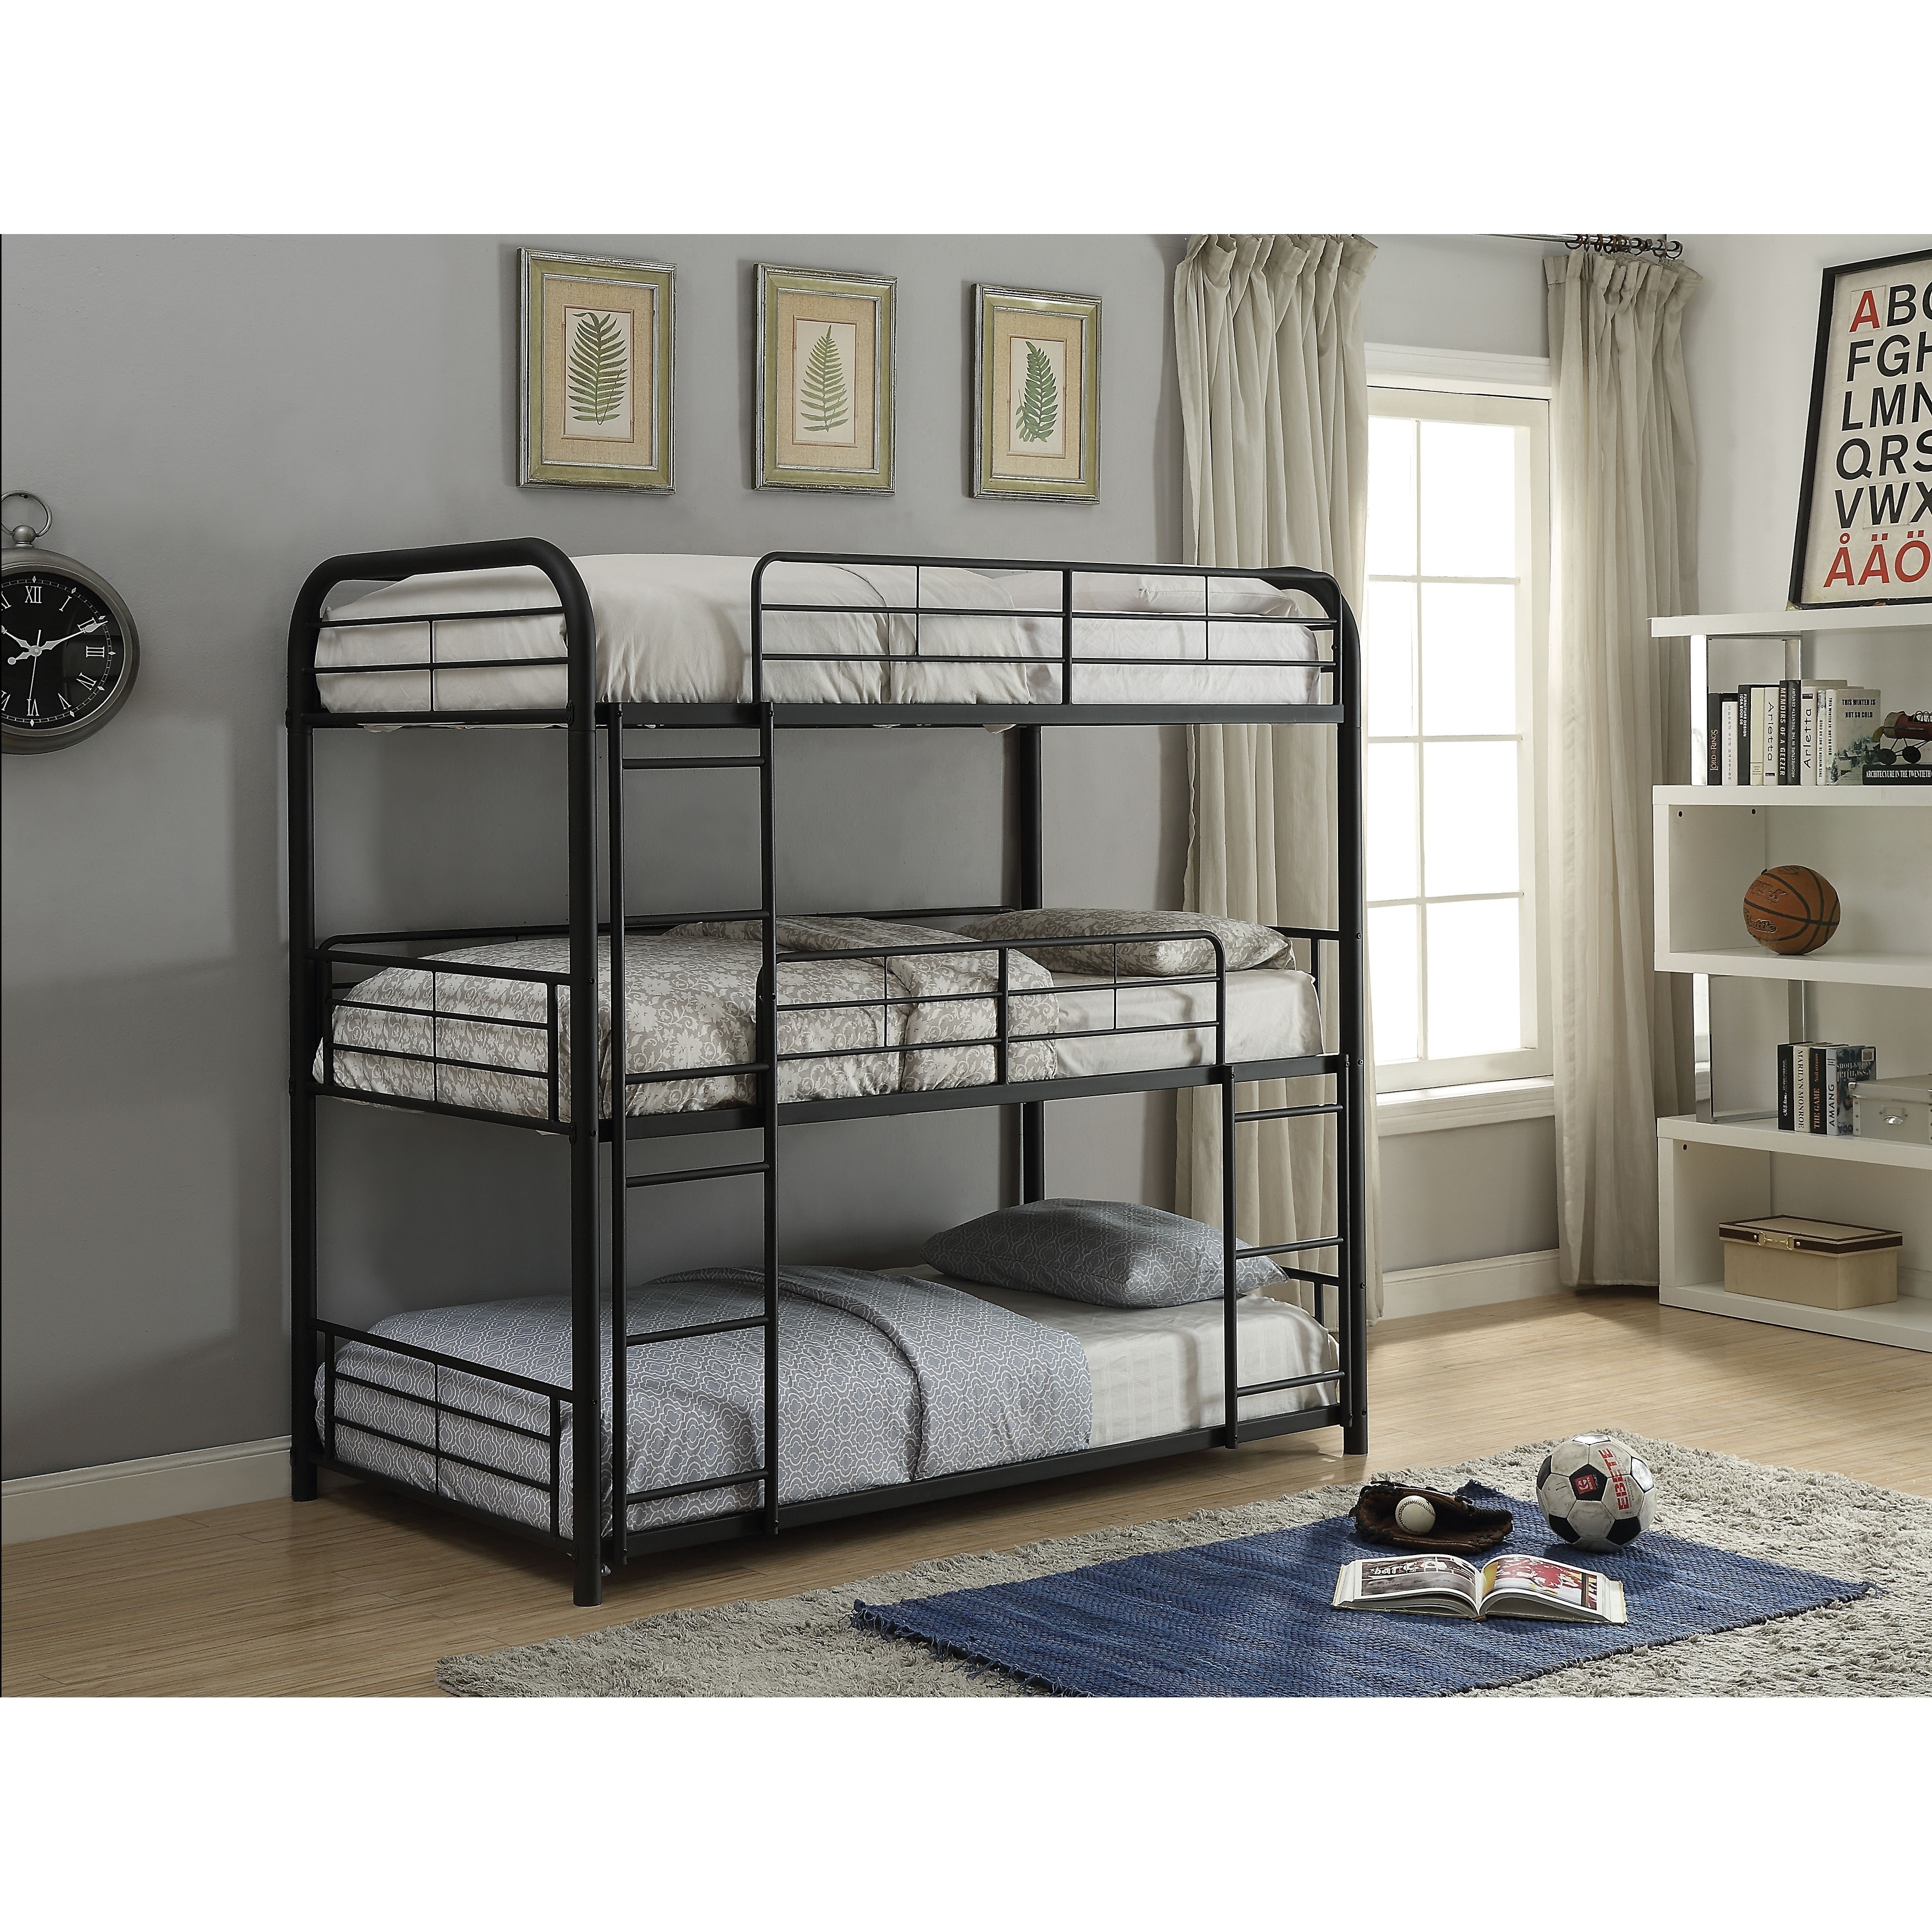 triple bunk bed ebay